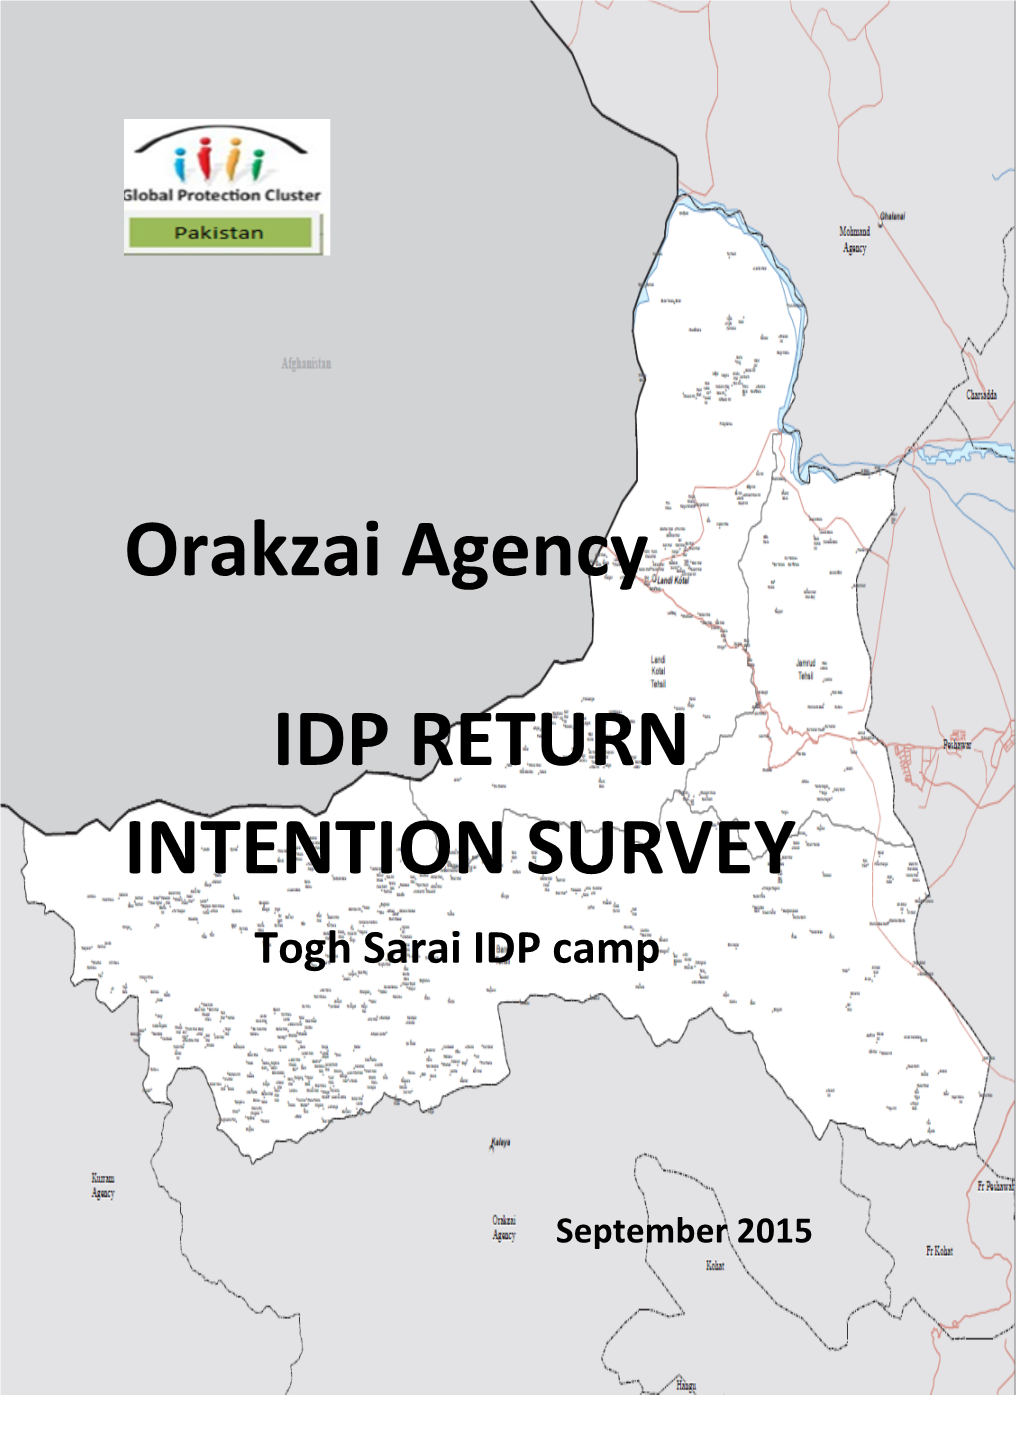 Orakzai Agency IDP RETURN INTENTION SURVEY